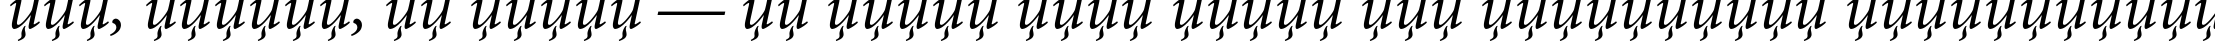 Пример написания шрифтом MinionCyr-Italic текста на украинском